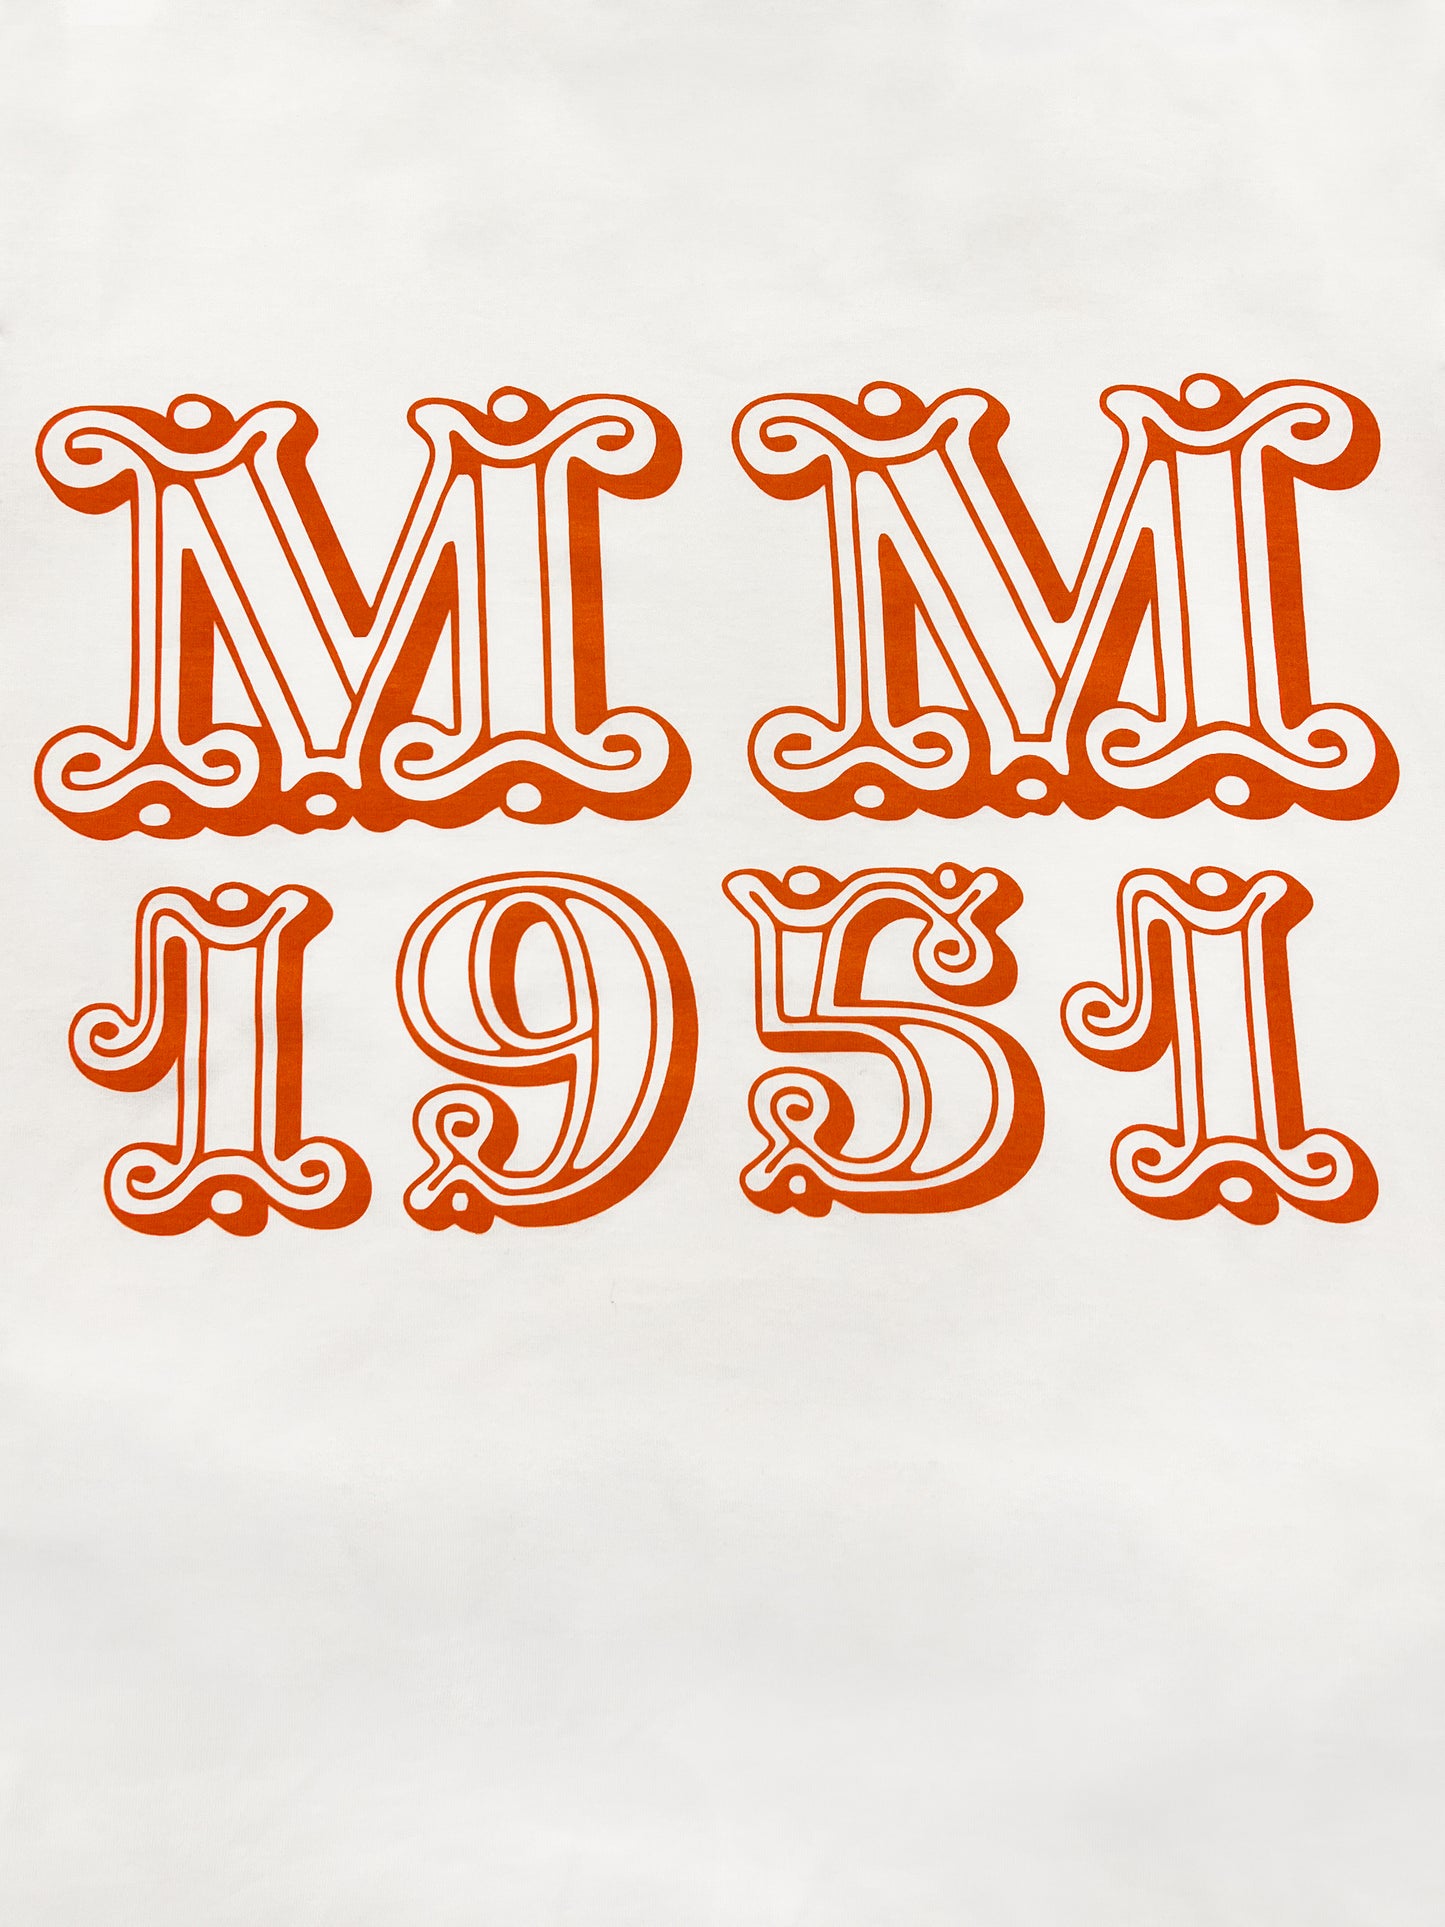 Max Mara T-Shirt Mincio Weiss/Orange